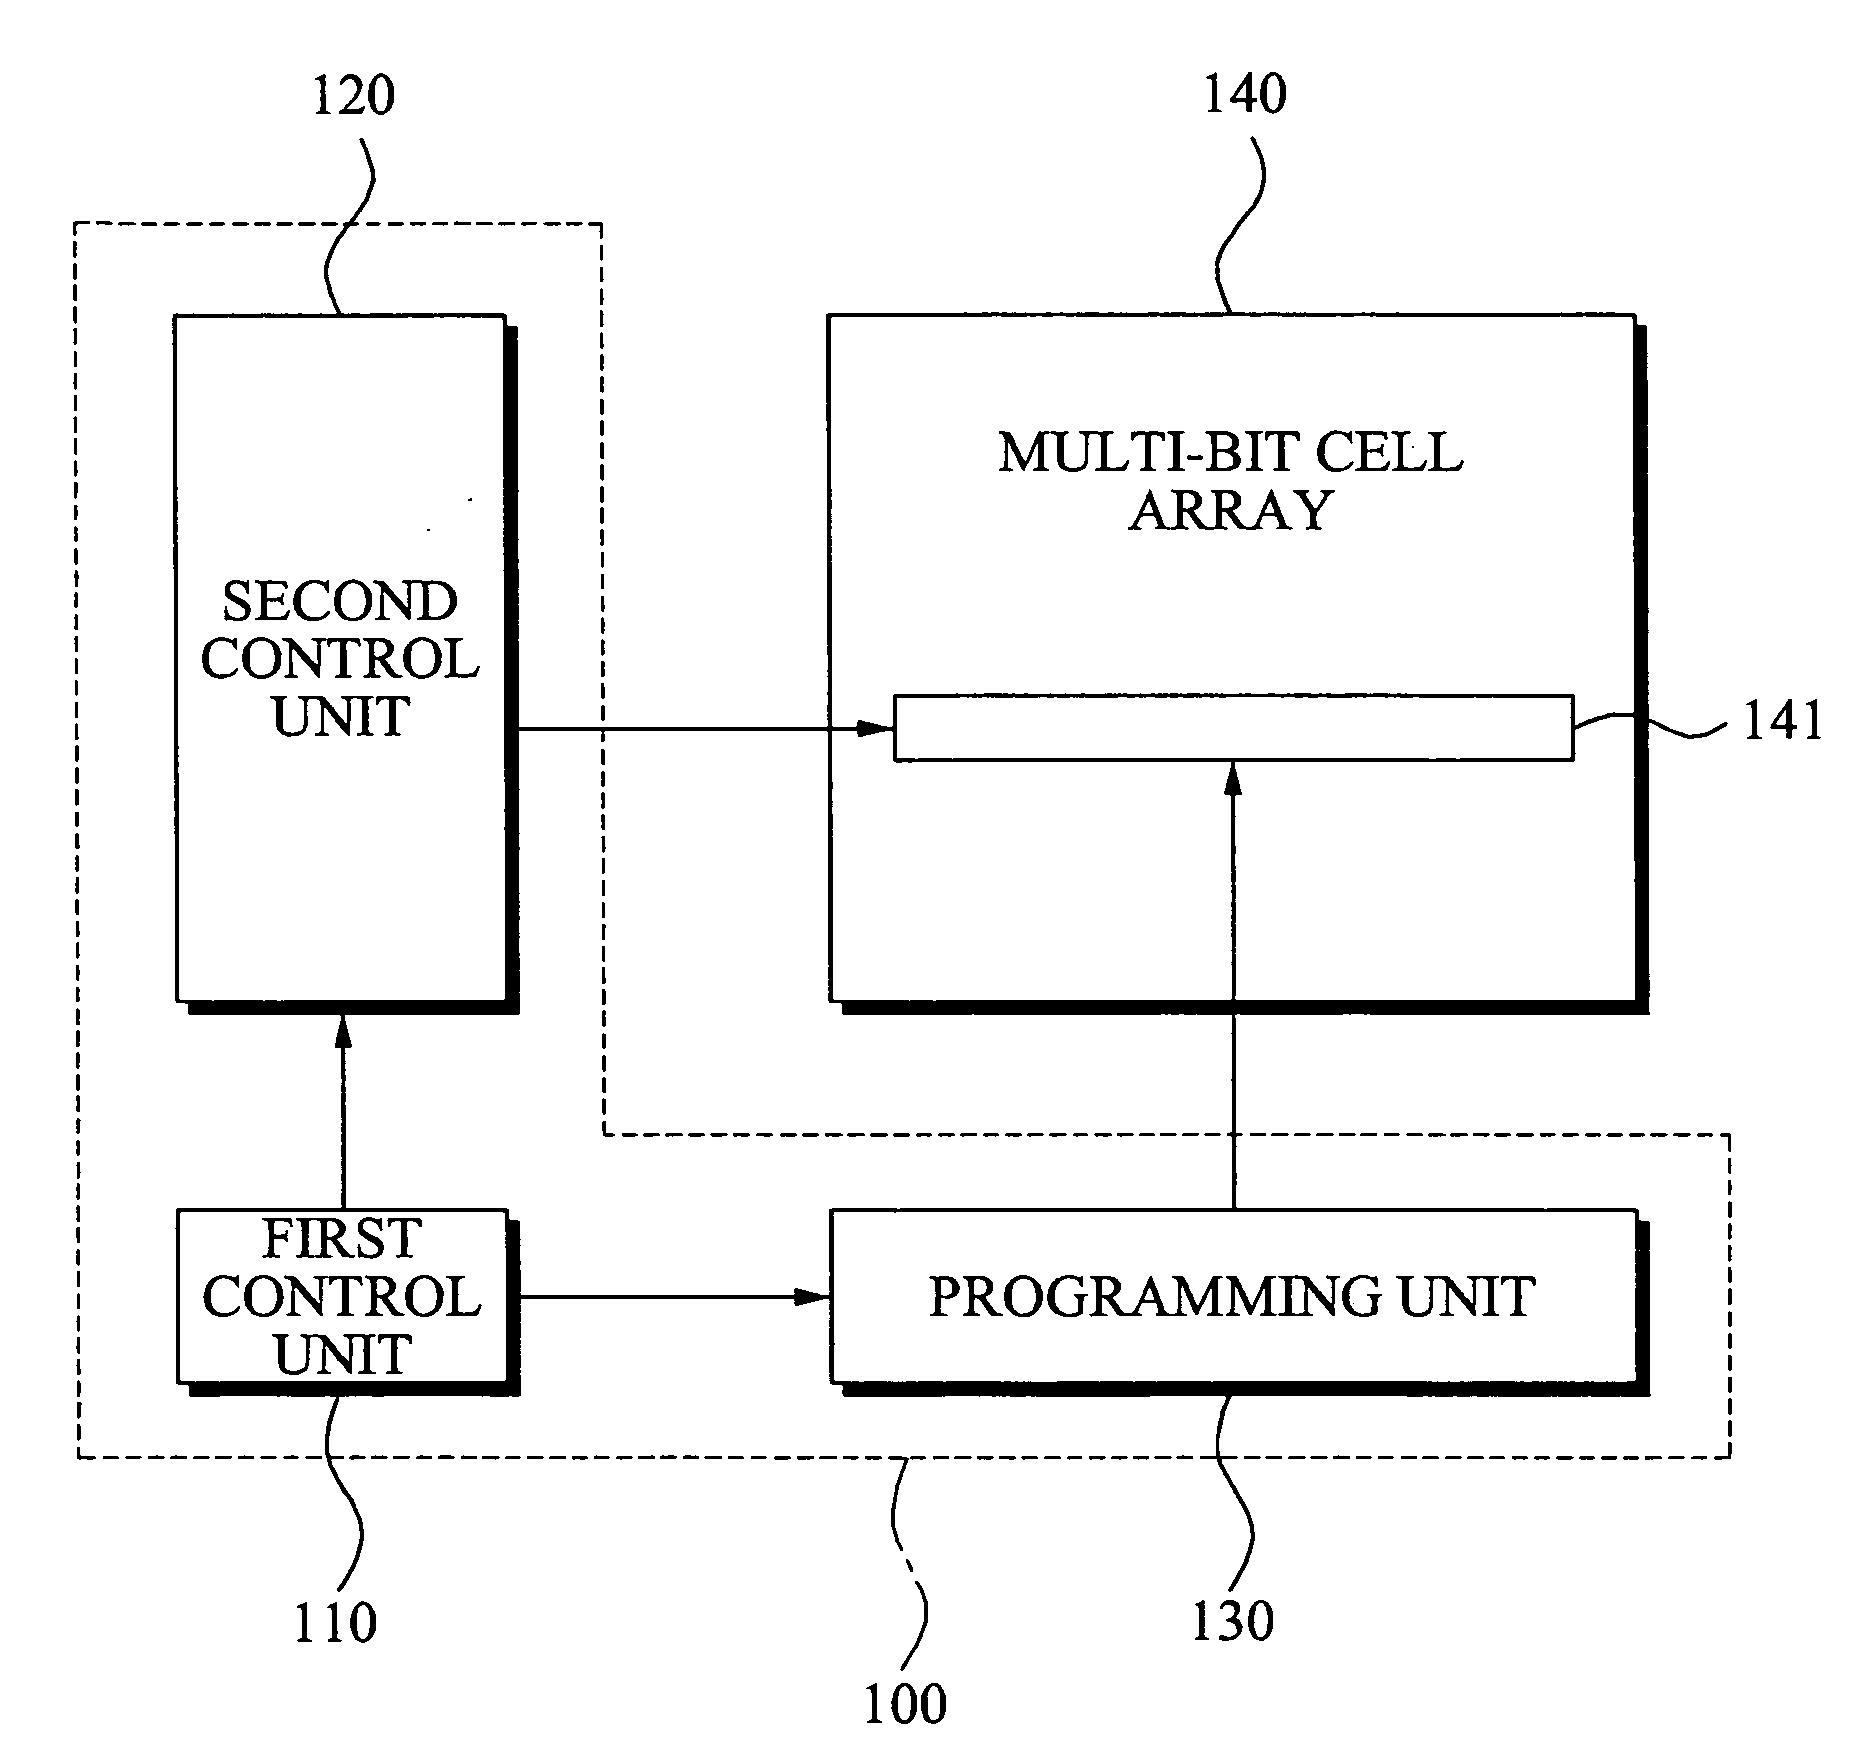 Apparatus and method of multi-bit programming